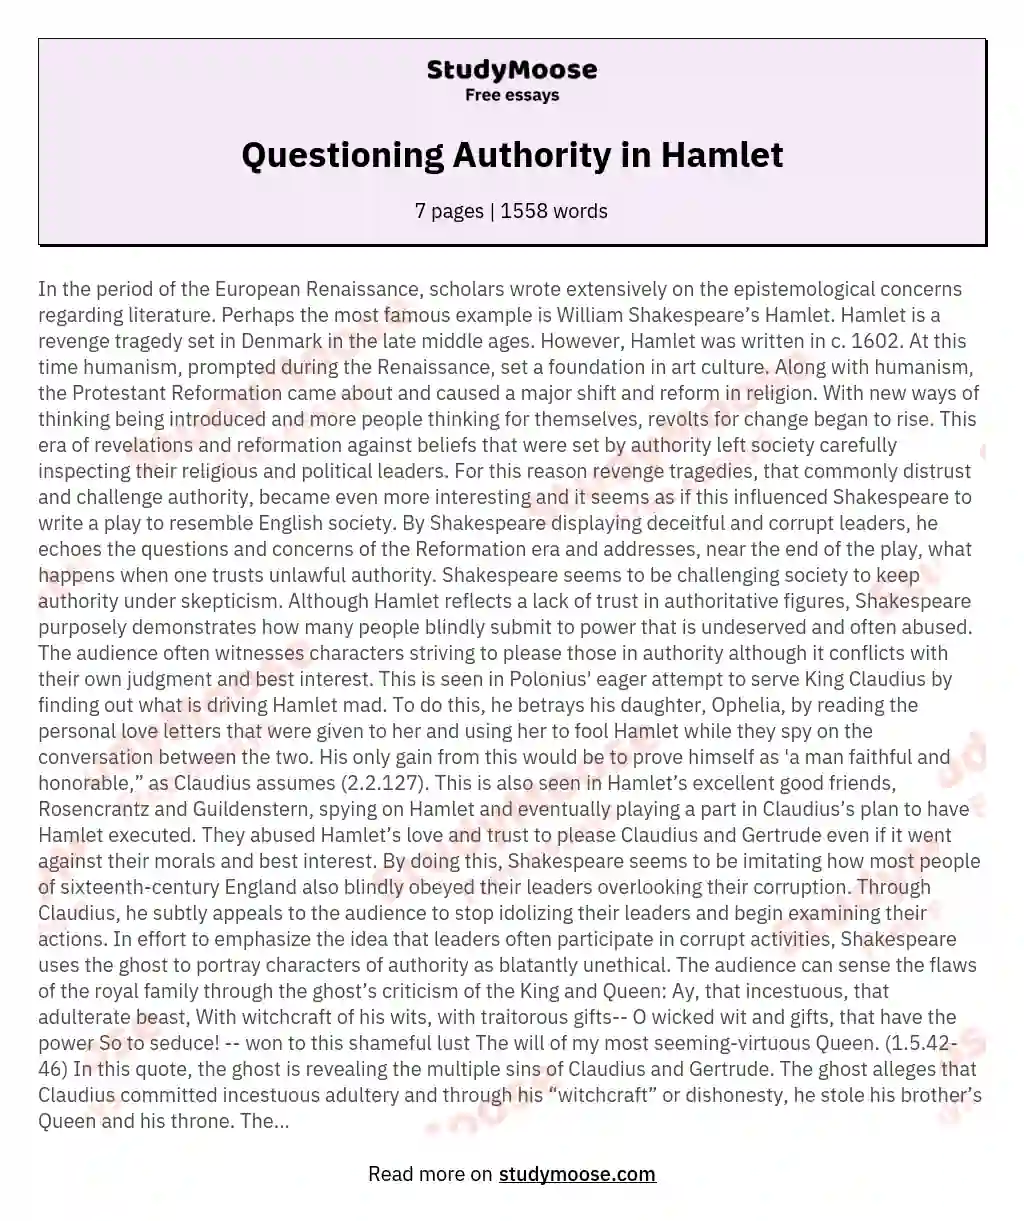 Questioning Authority in Hamlet essay